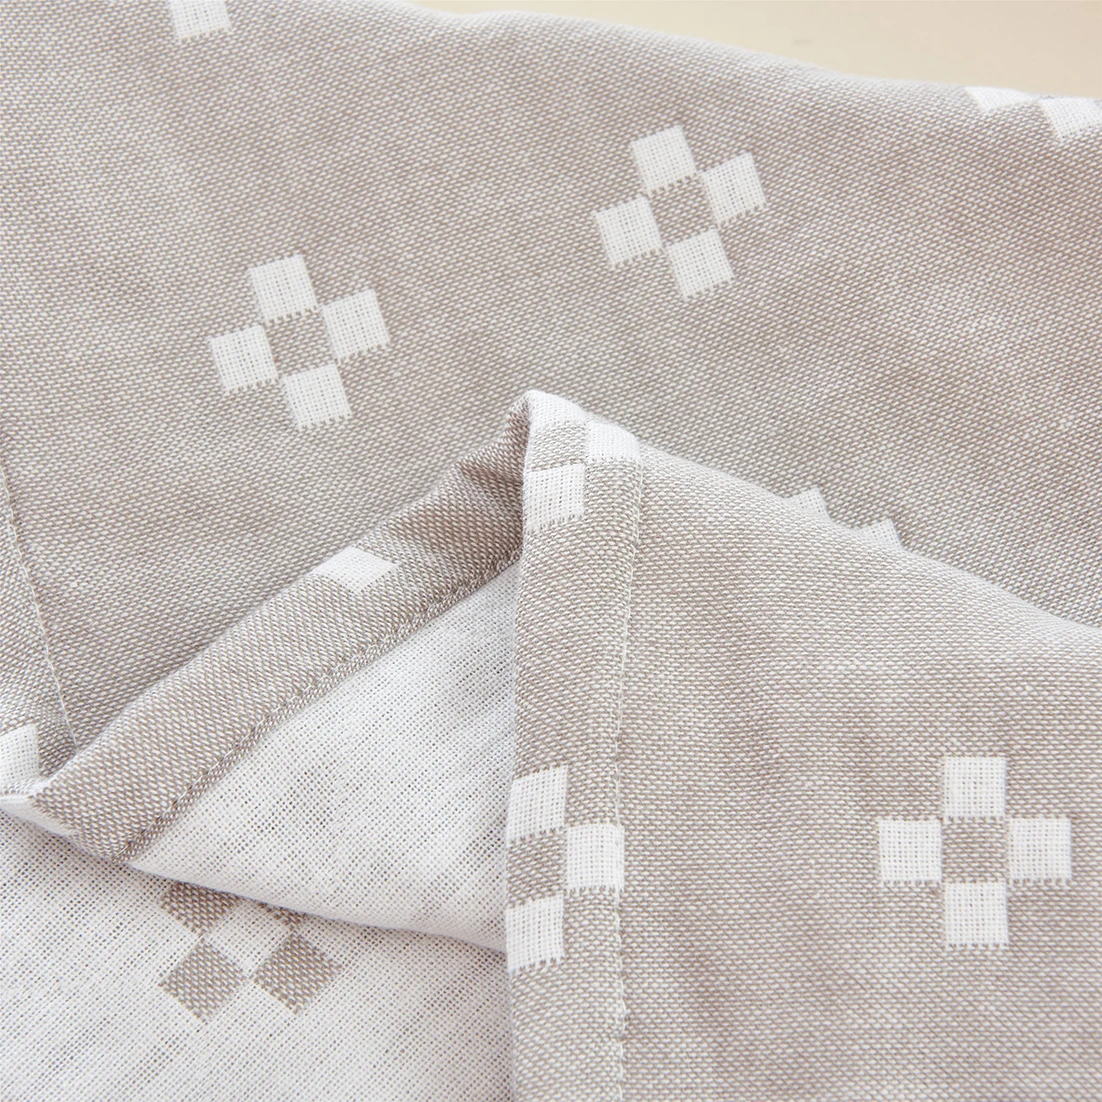 [ZETTA] хлопок трехслойная марлевая Подушка полотенце пара наволочка полотенце цельная подушка для взрослых полотенце